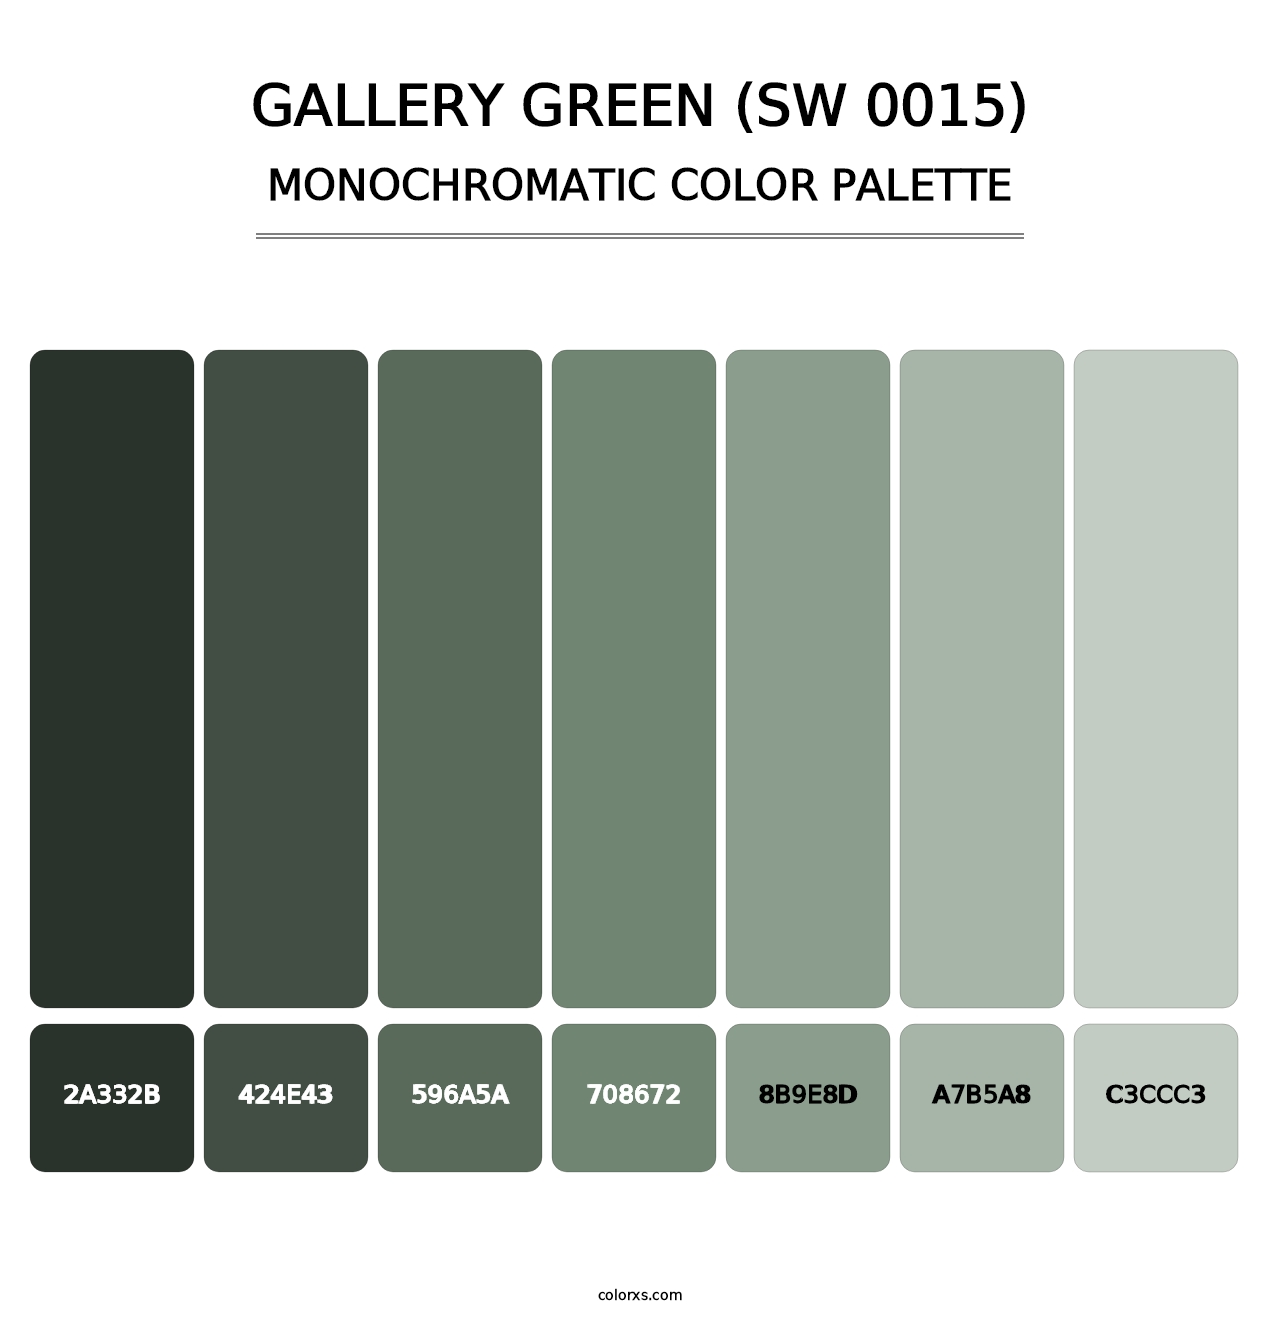 Gallery Green (SW 0015) - Monochromatic Color Palette